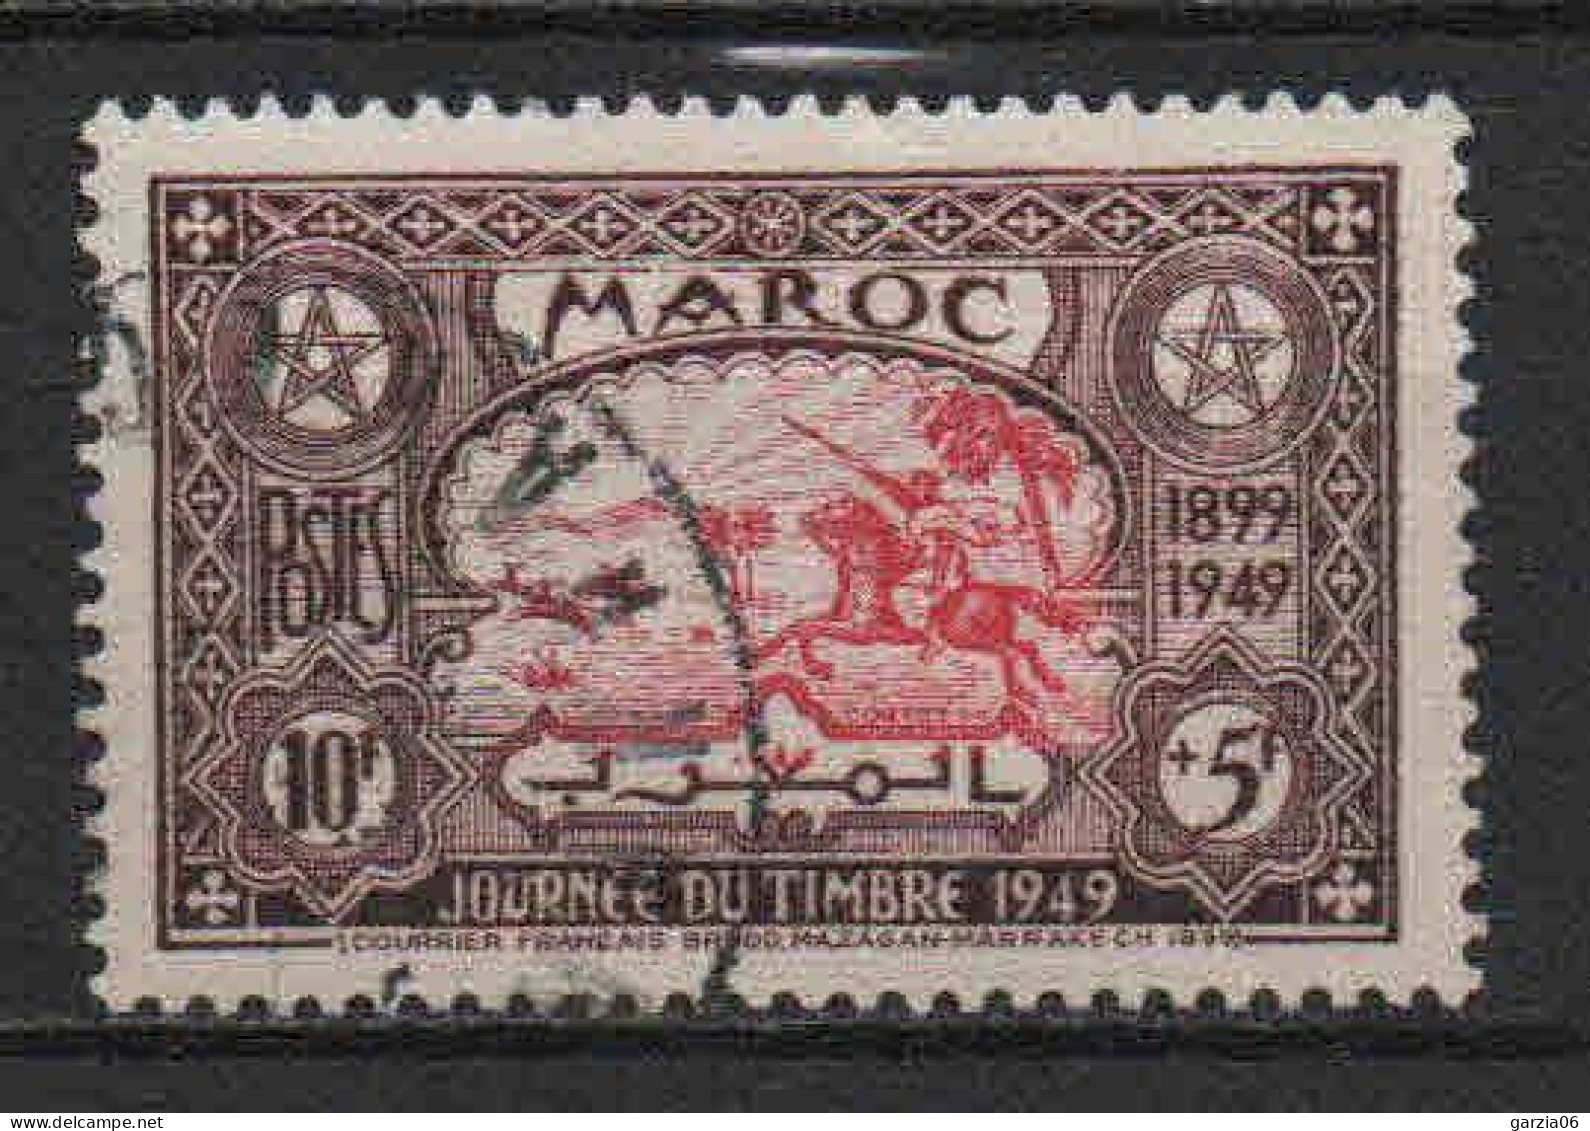 Maroc - 1949 - Journée Du Timbre -  N° 275 - Oblit - Used - Usati